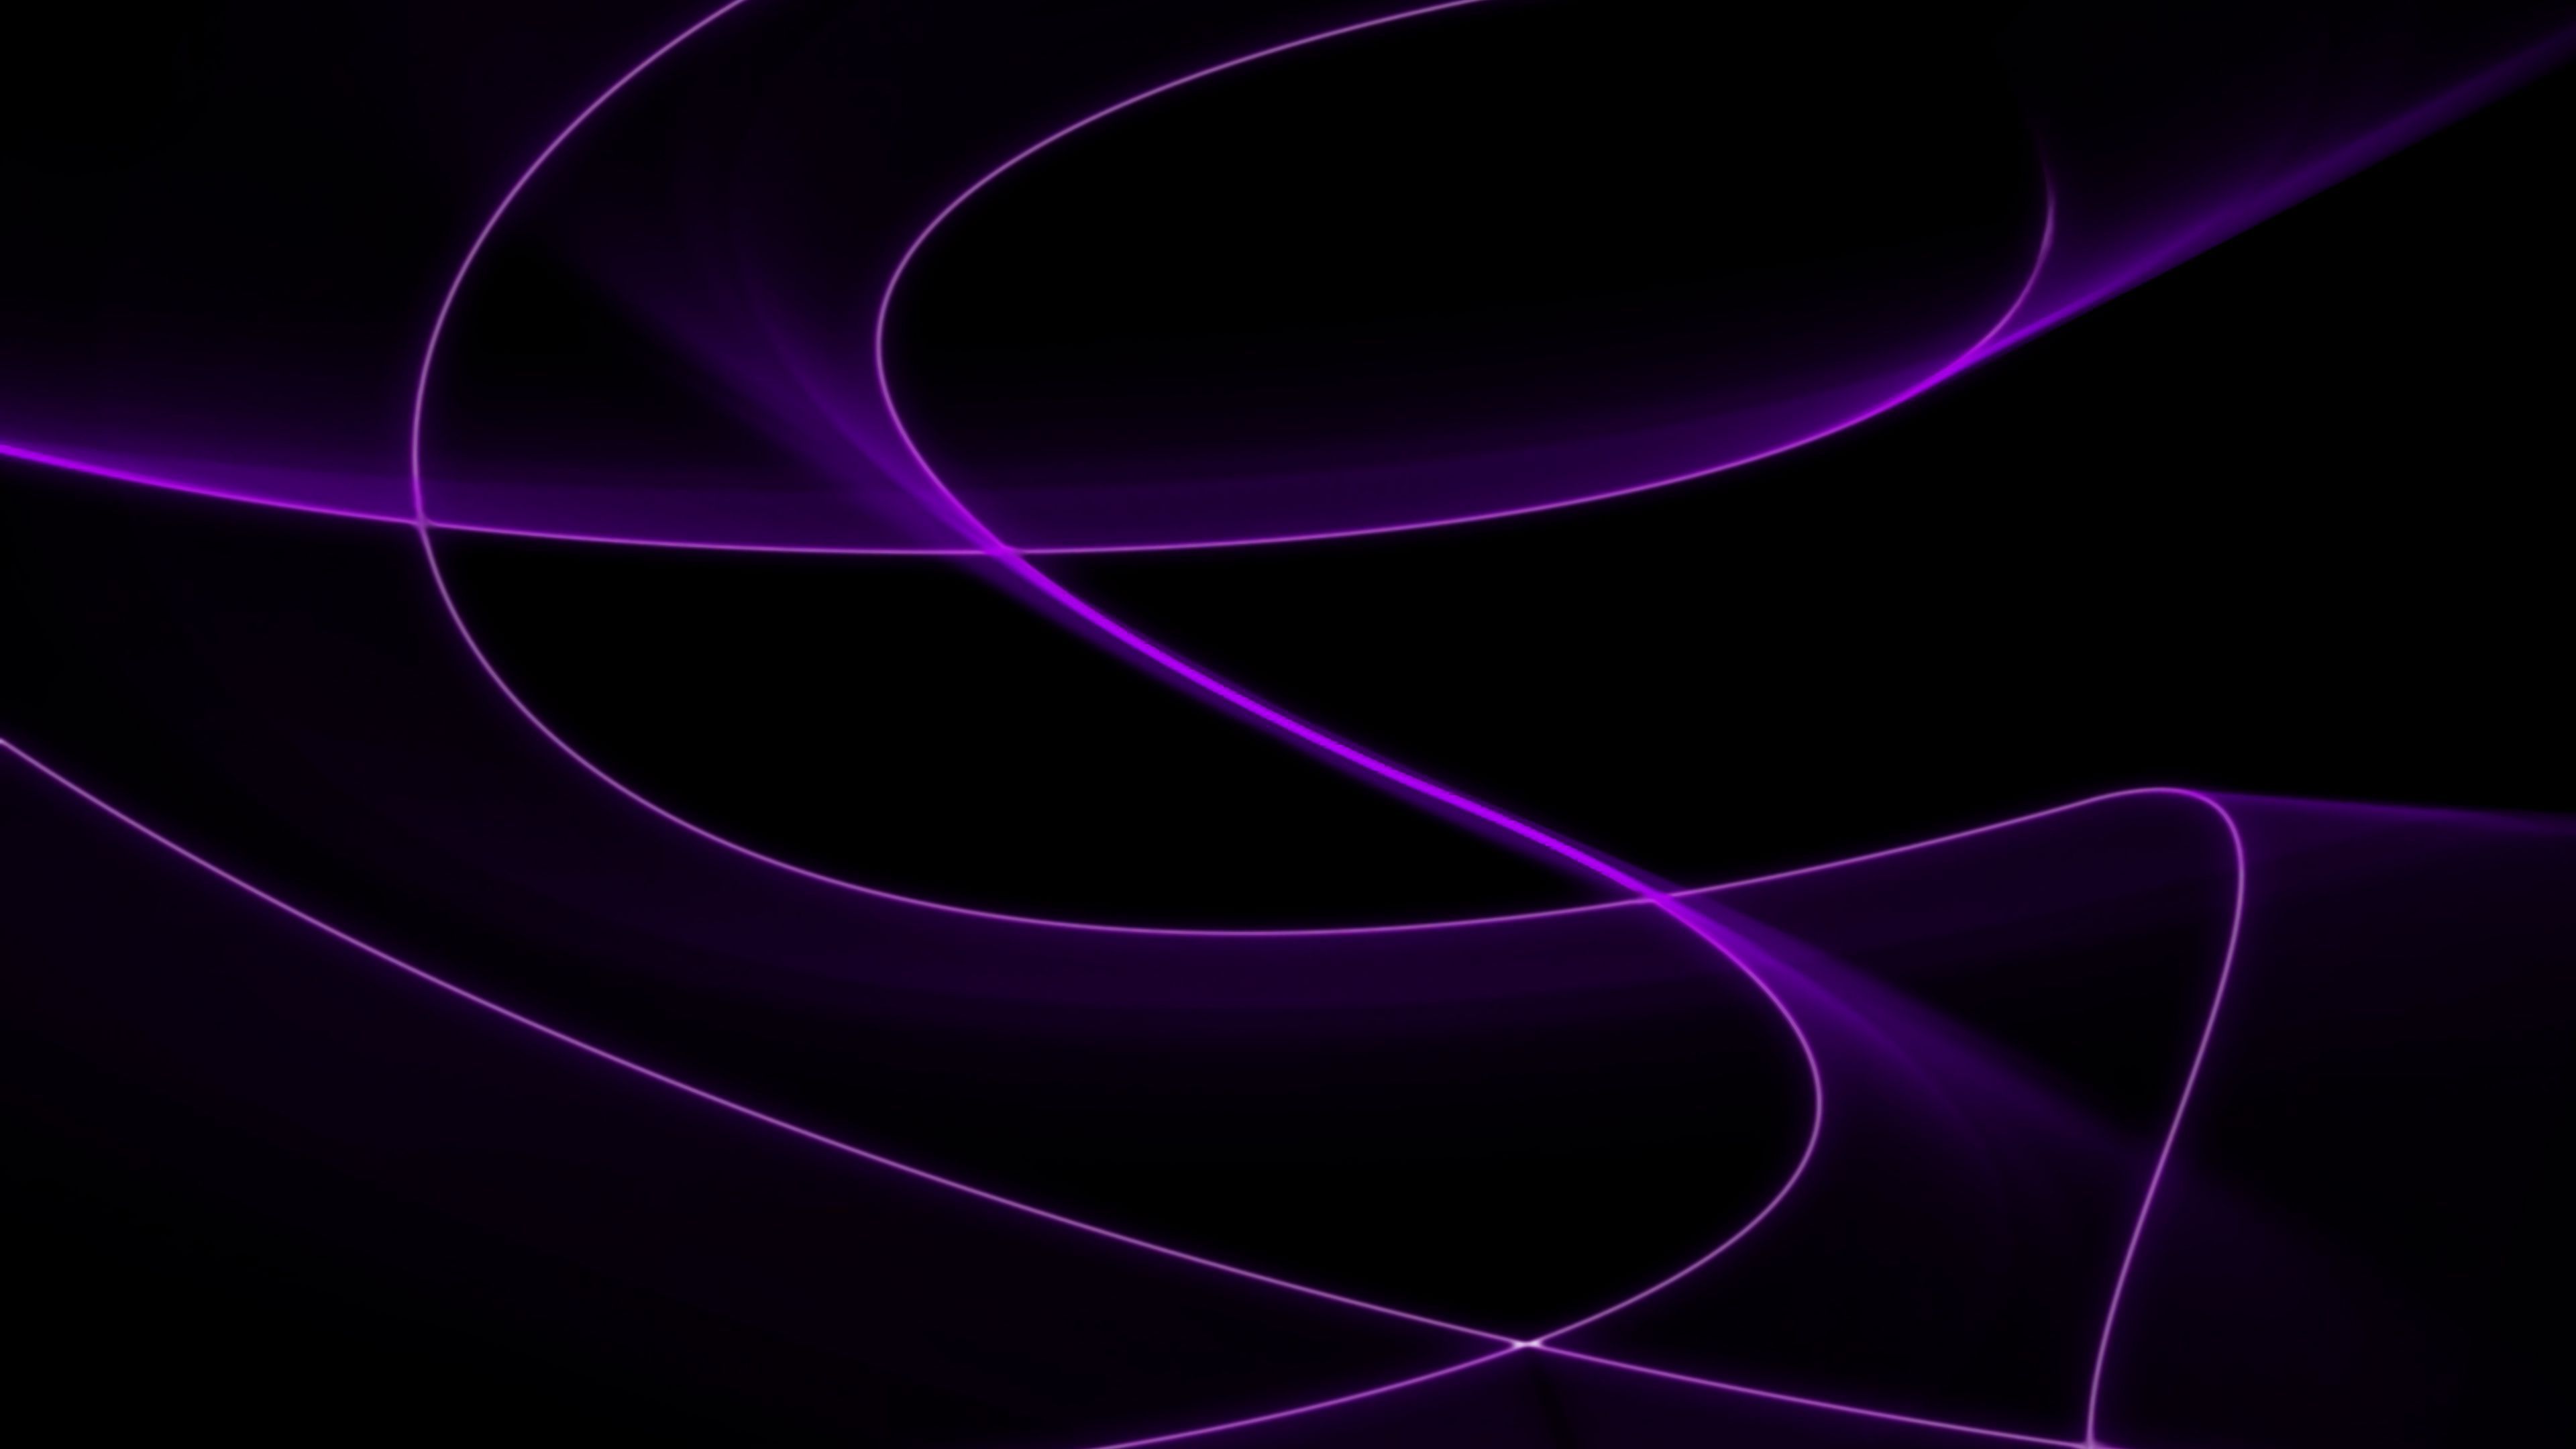 Download wallpaper 3840x2160 lines, waves, abstraction, dark, purple 4k uhd 16:9 HD background